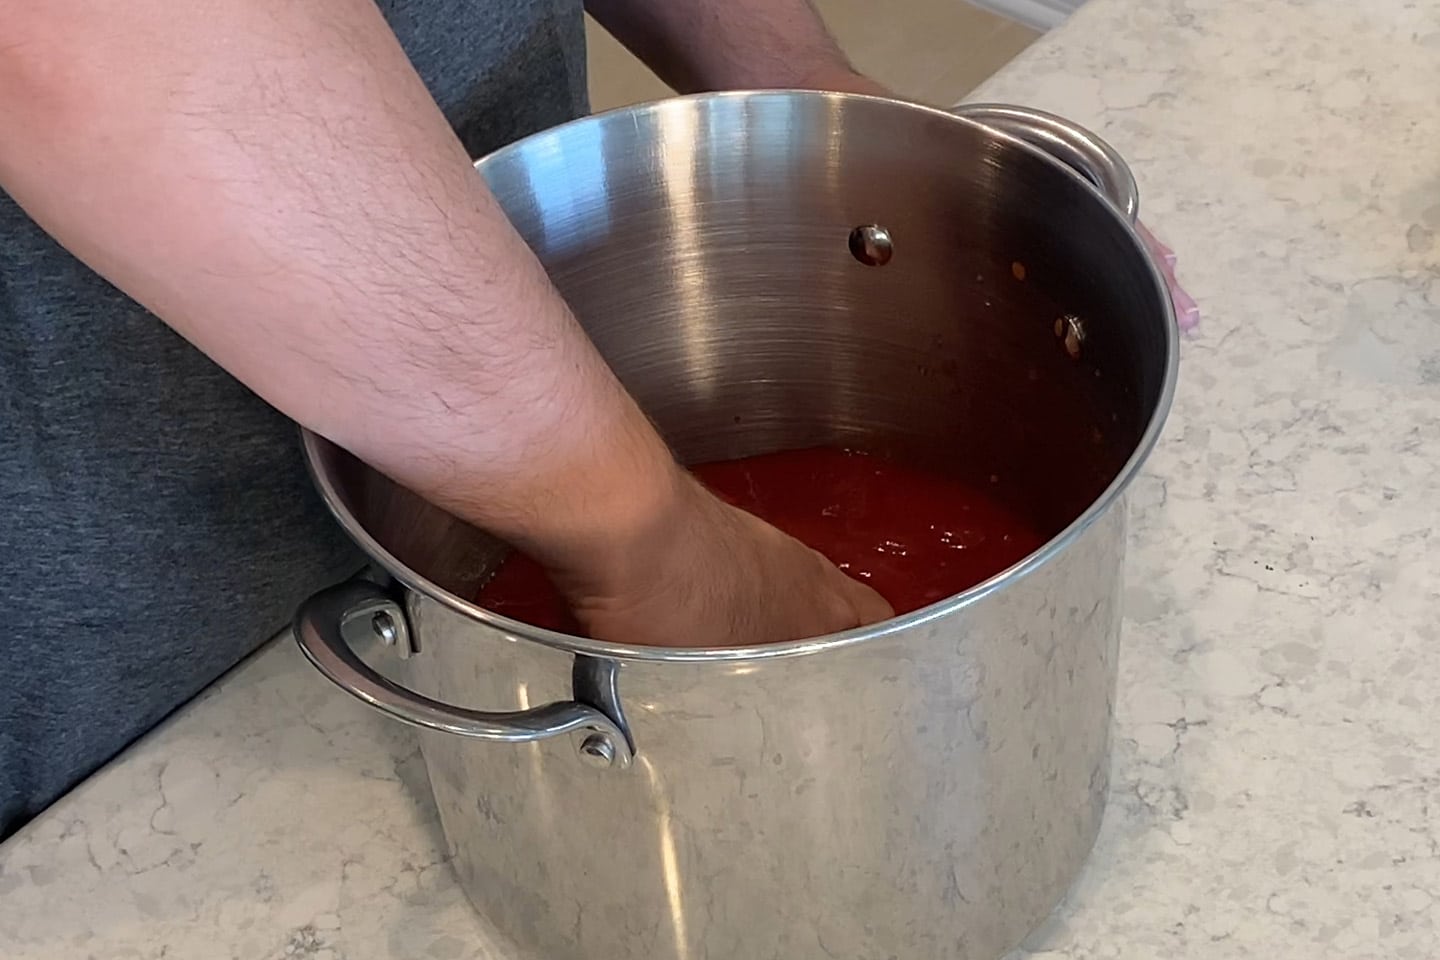 crushing the tomatoes